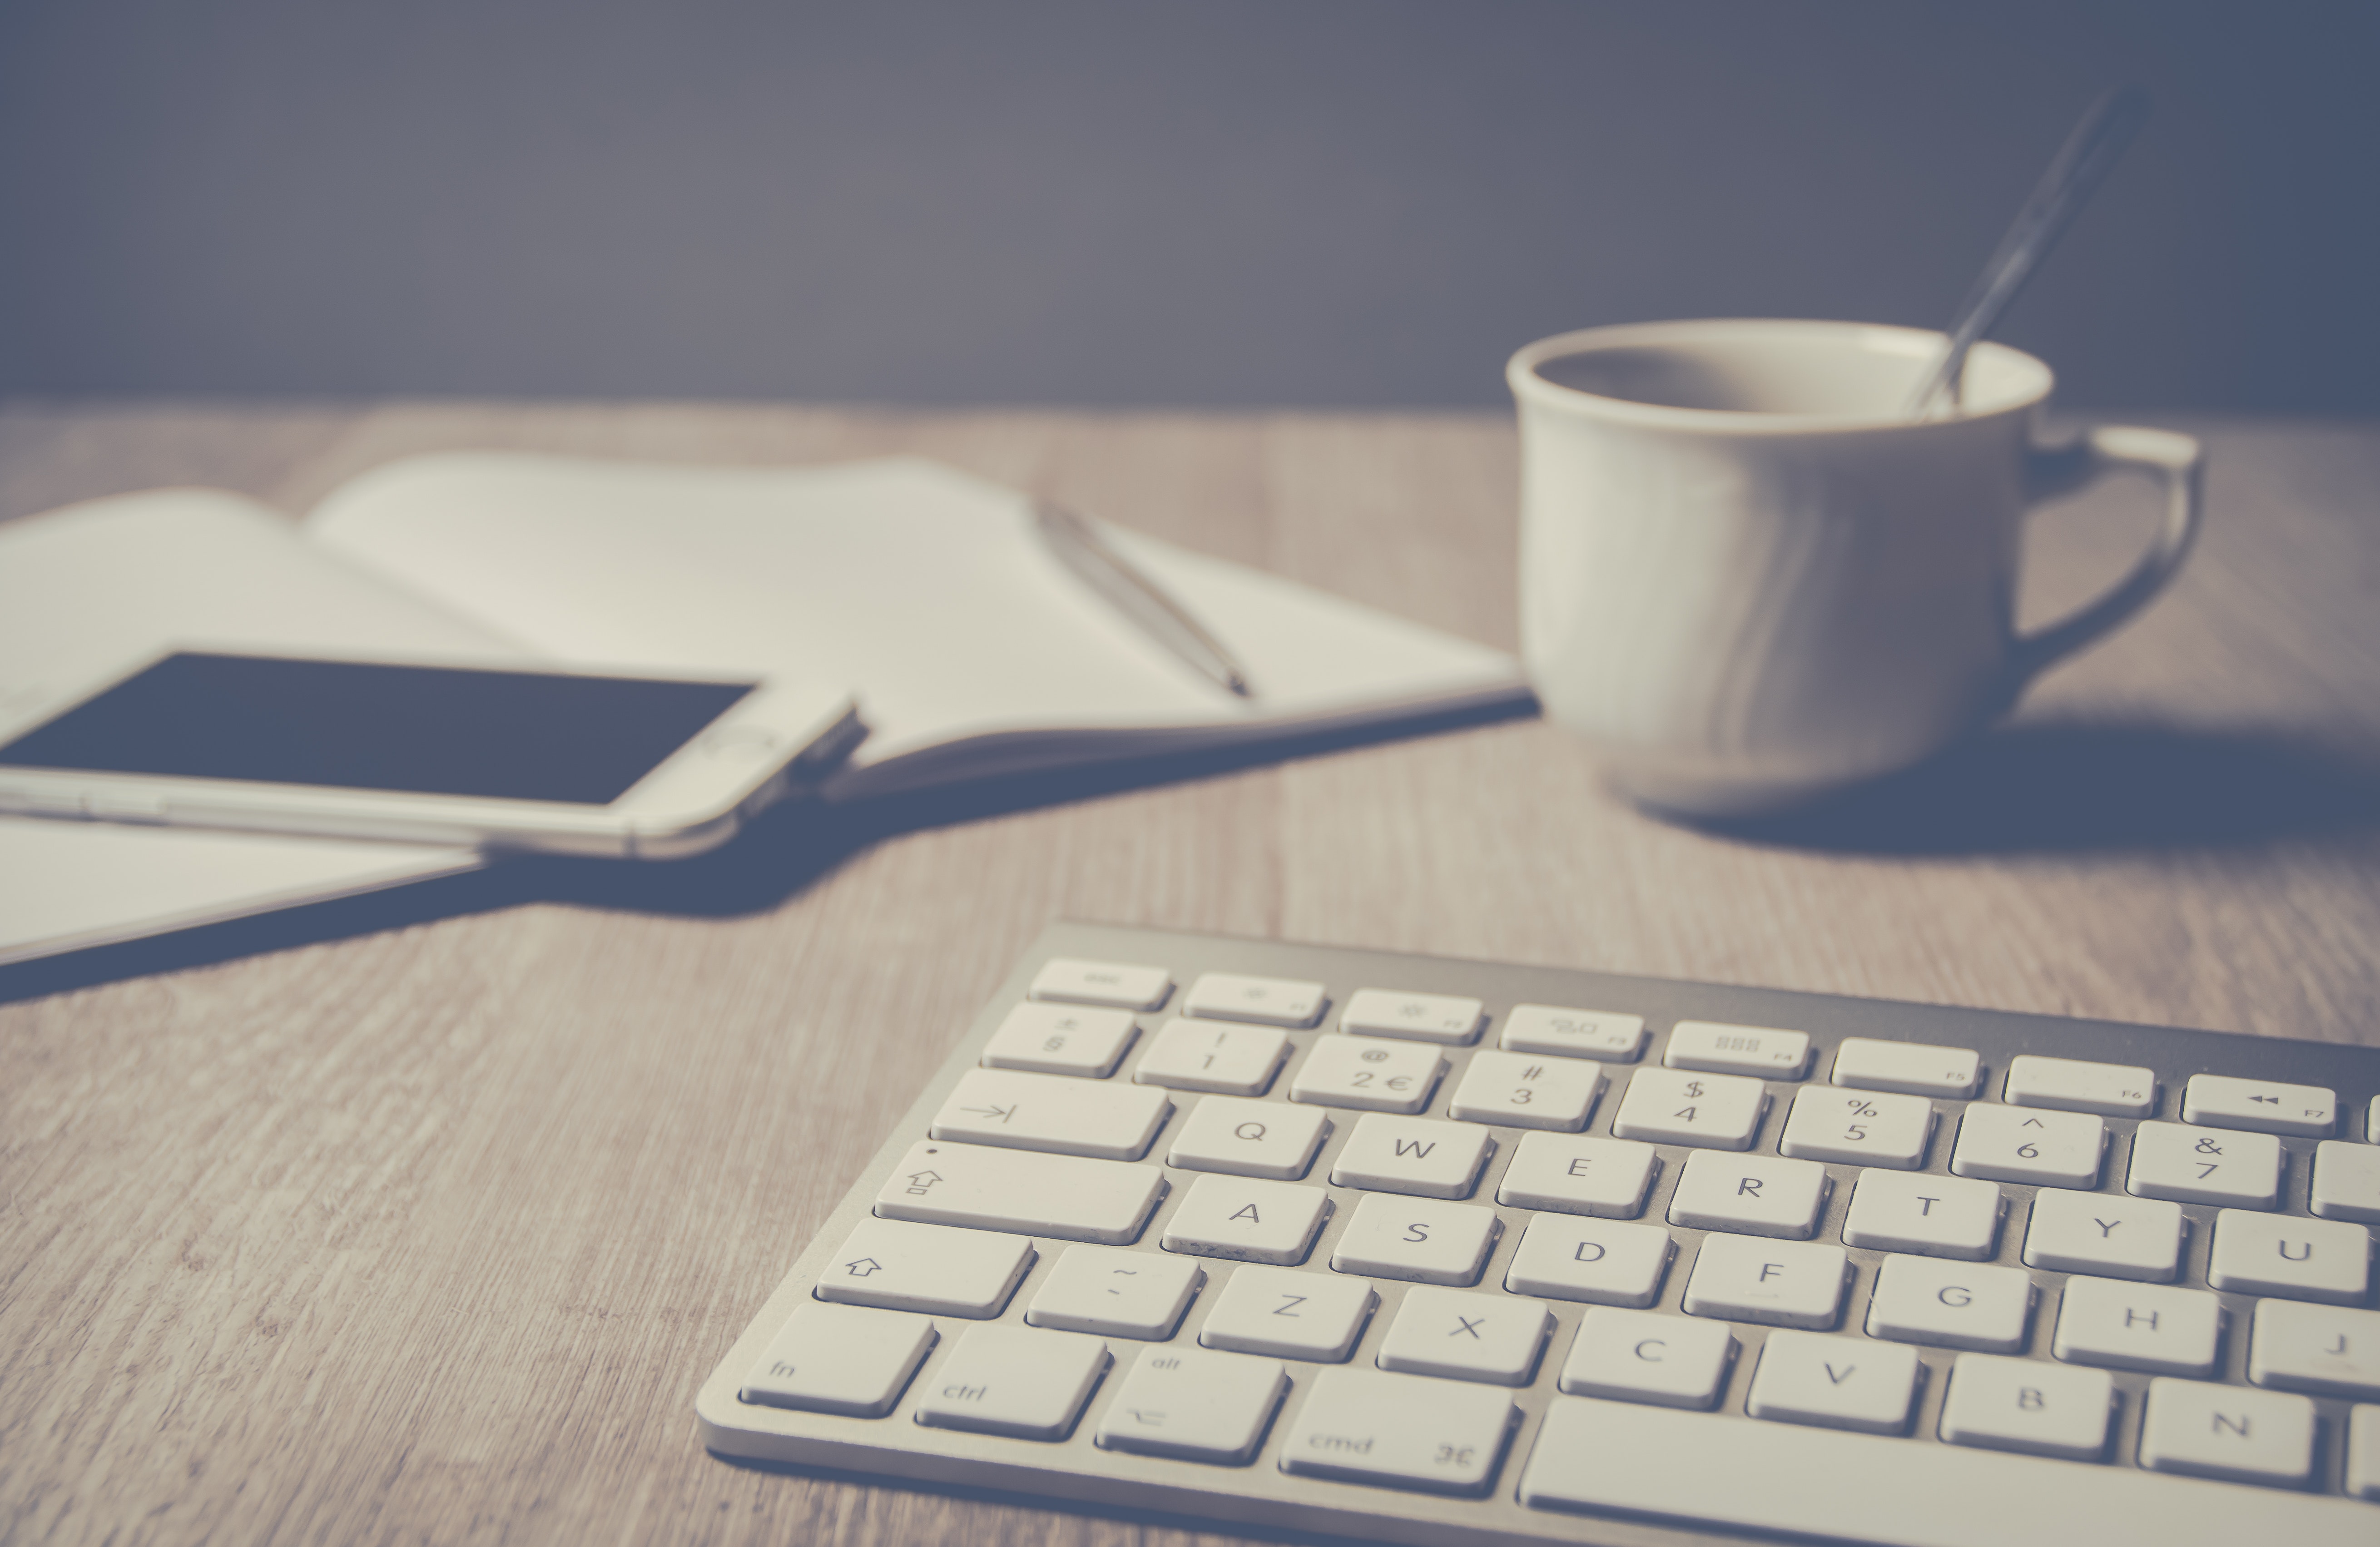 Magic Keyboard Beside Coffee Mug on Desk, Ballpen, Mobile, Work space, Work area, HQ Photo